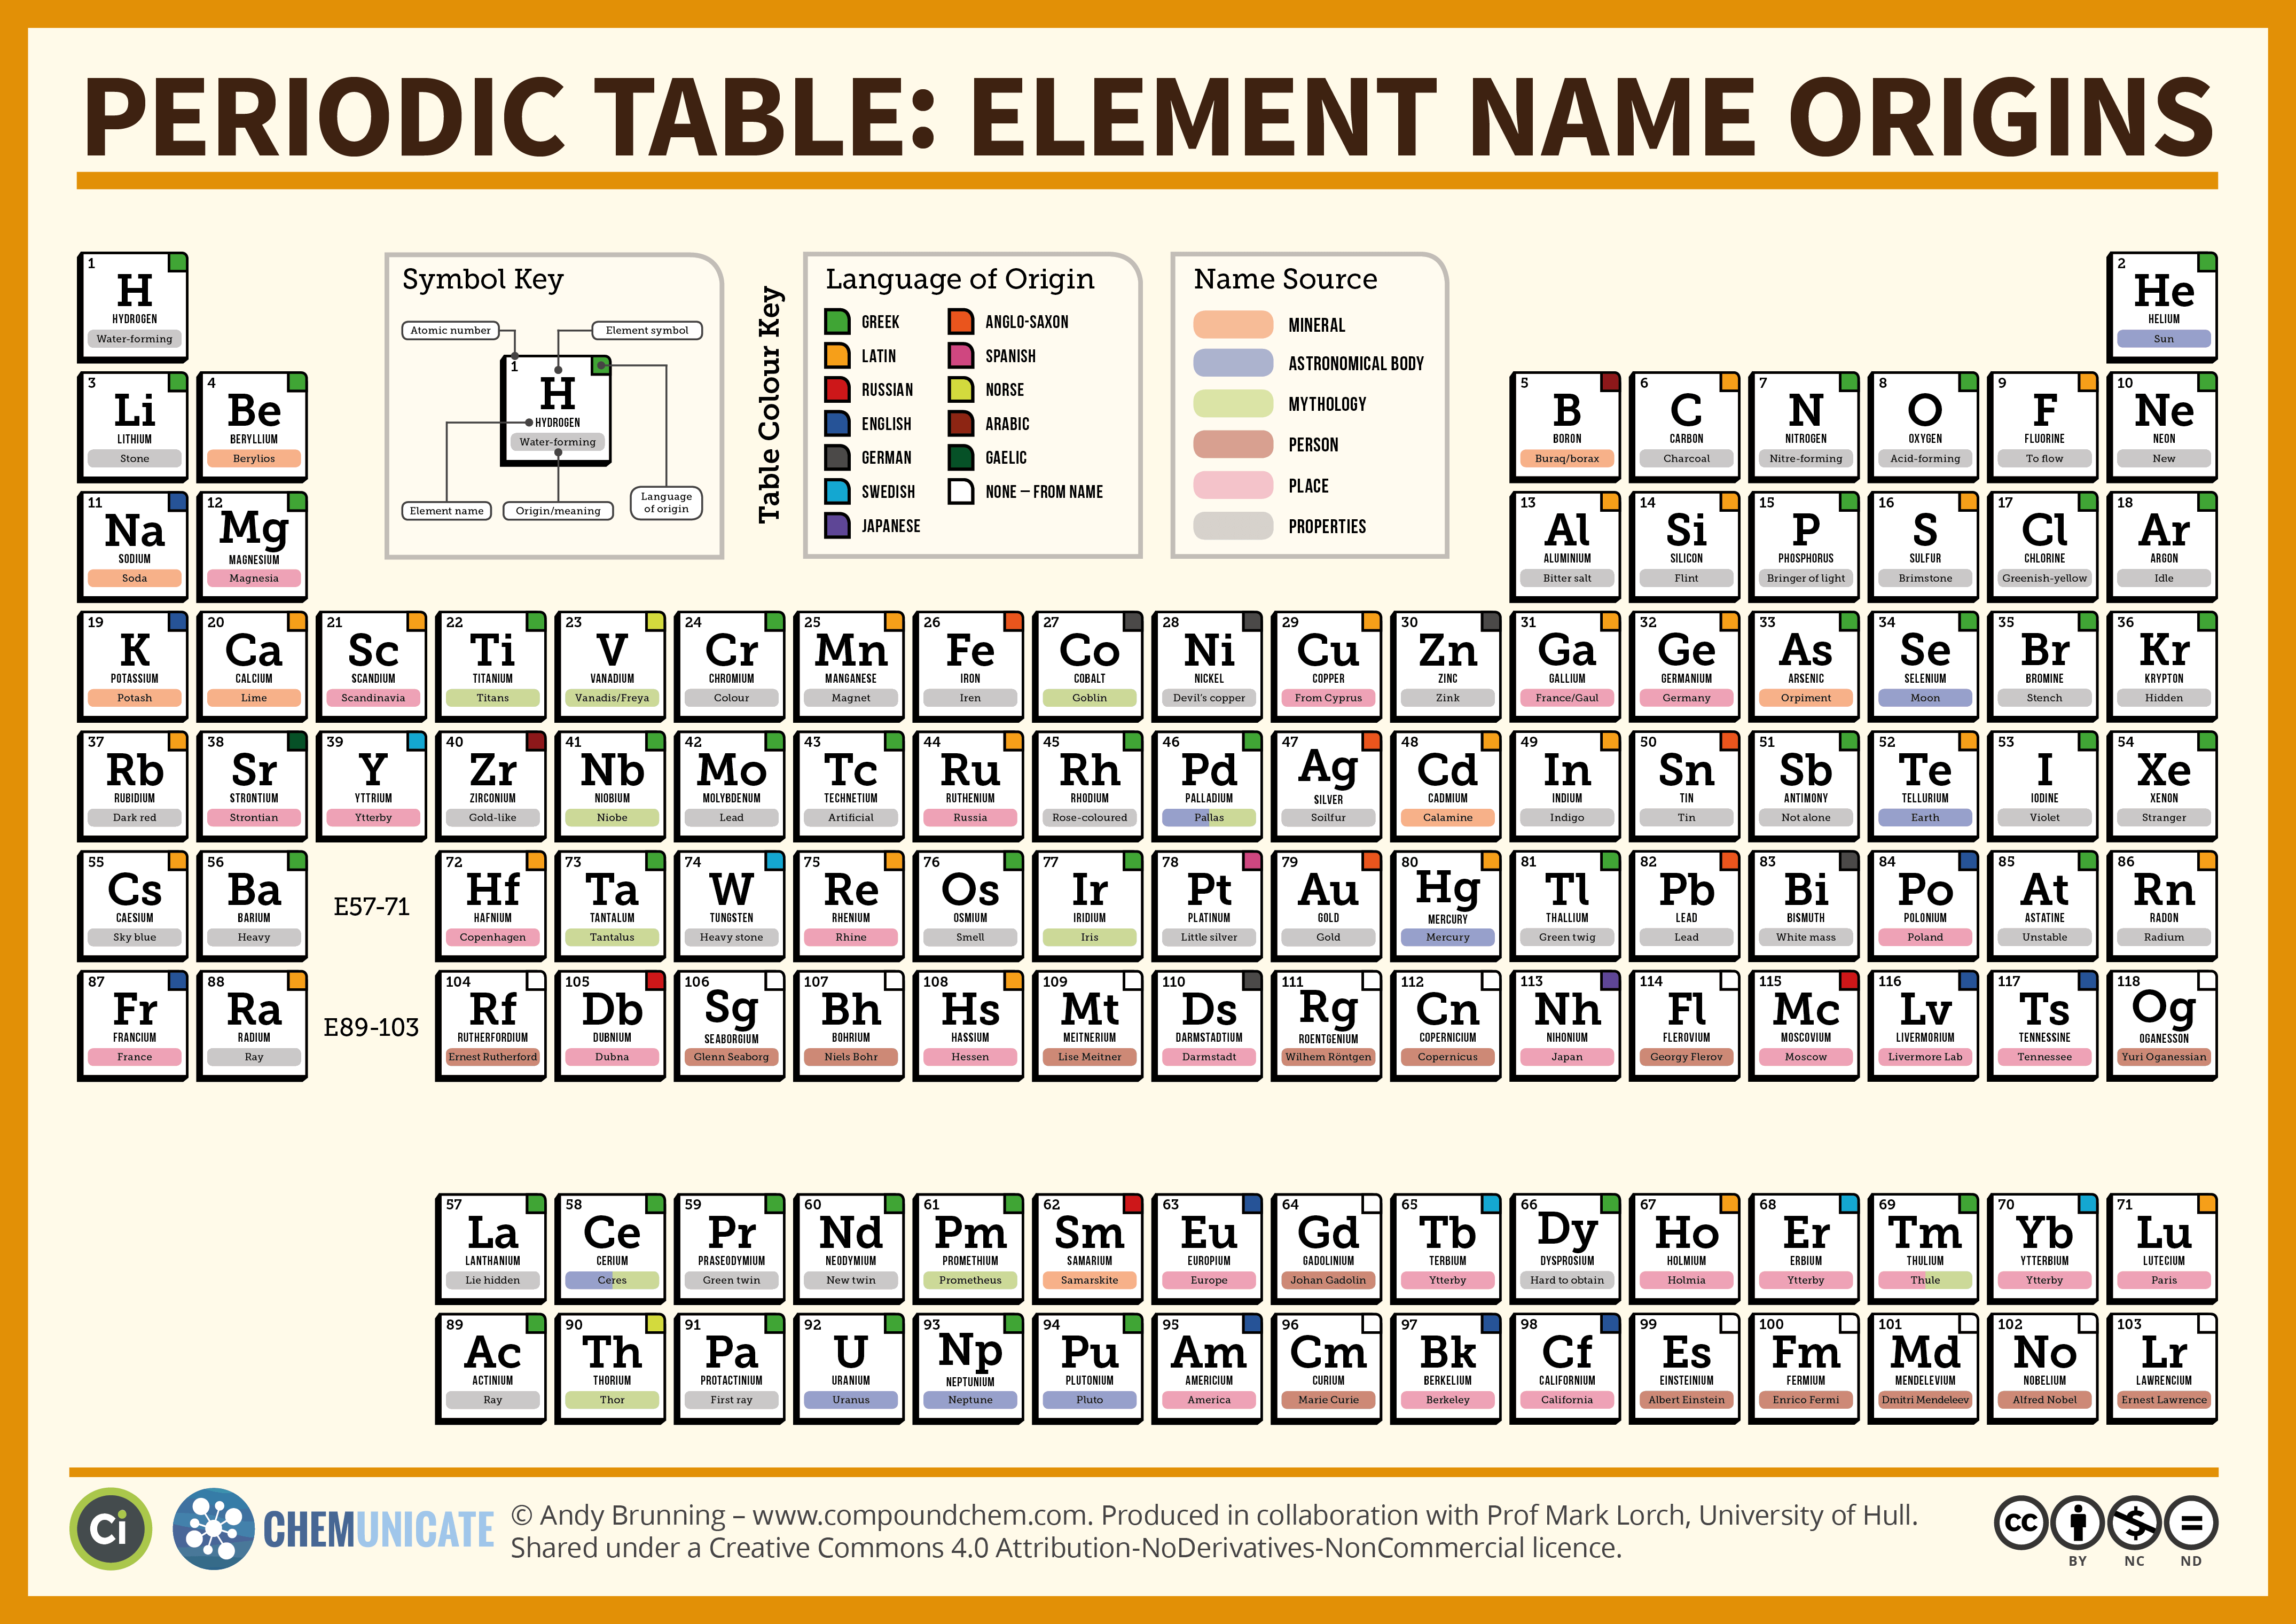 Element #20